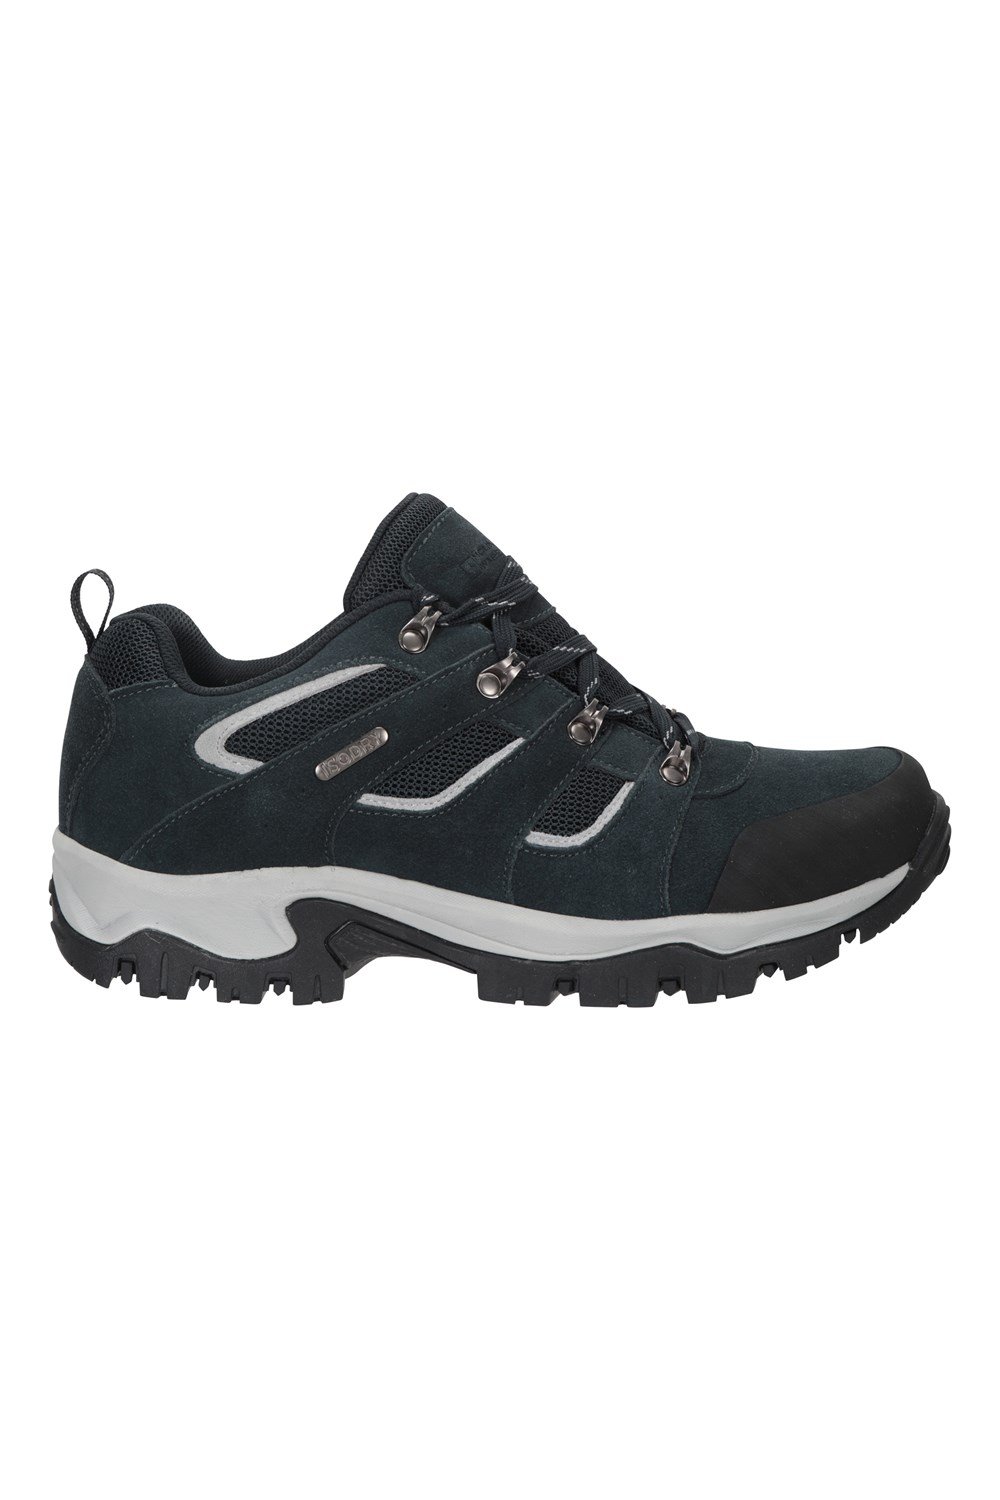 Mountain Warehouse Mens Voyage Waterproof Walking Shoes Hiking Trainers ...